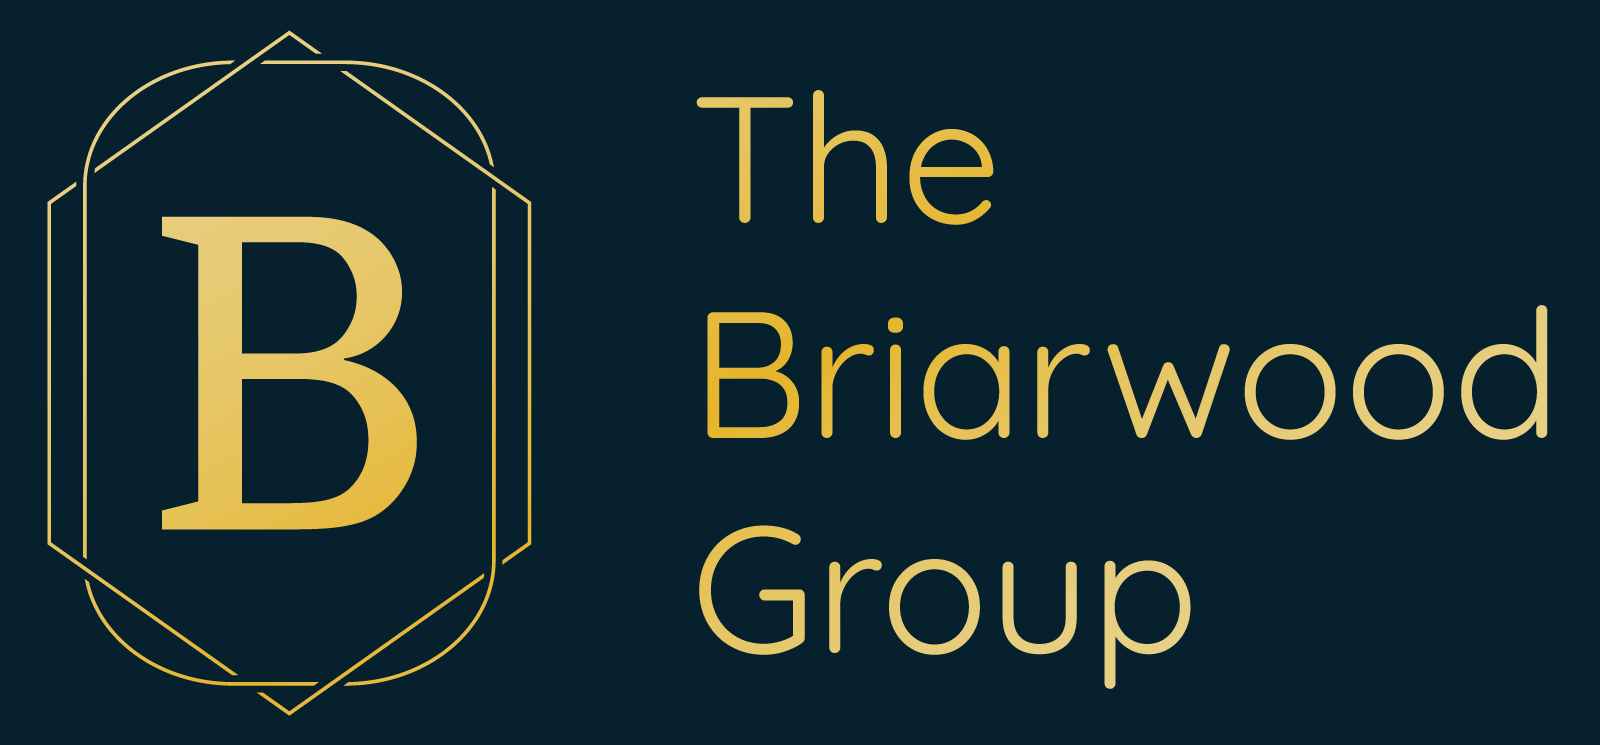 The Briarwood Group gold logo